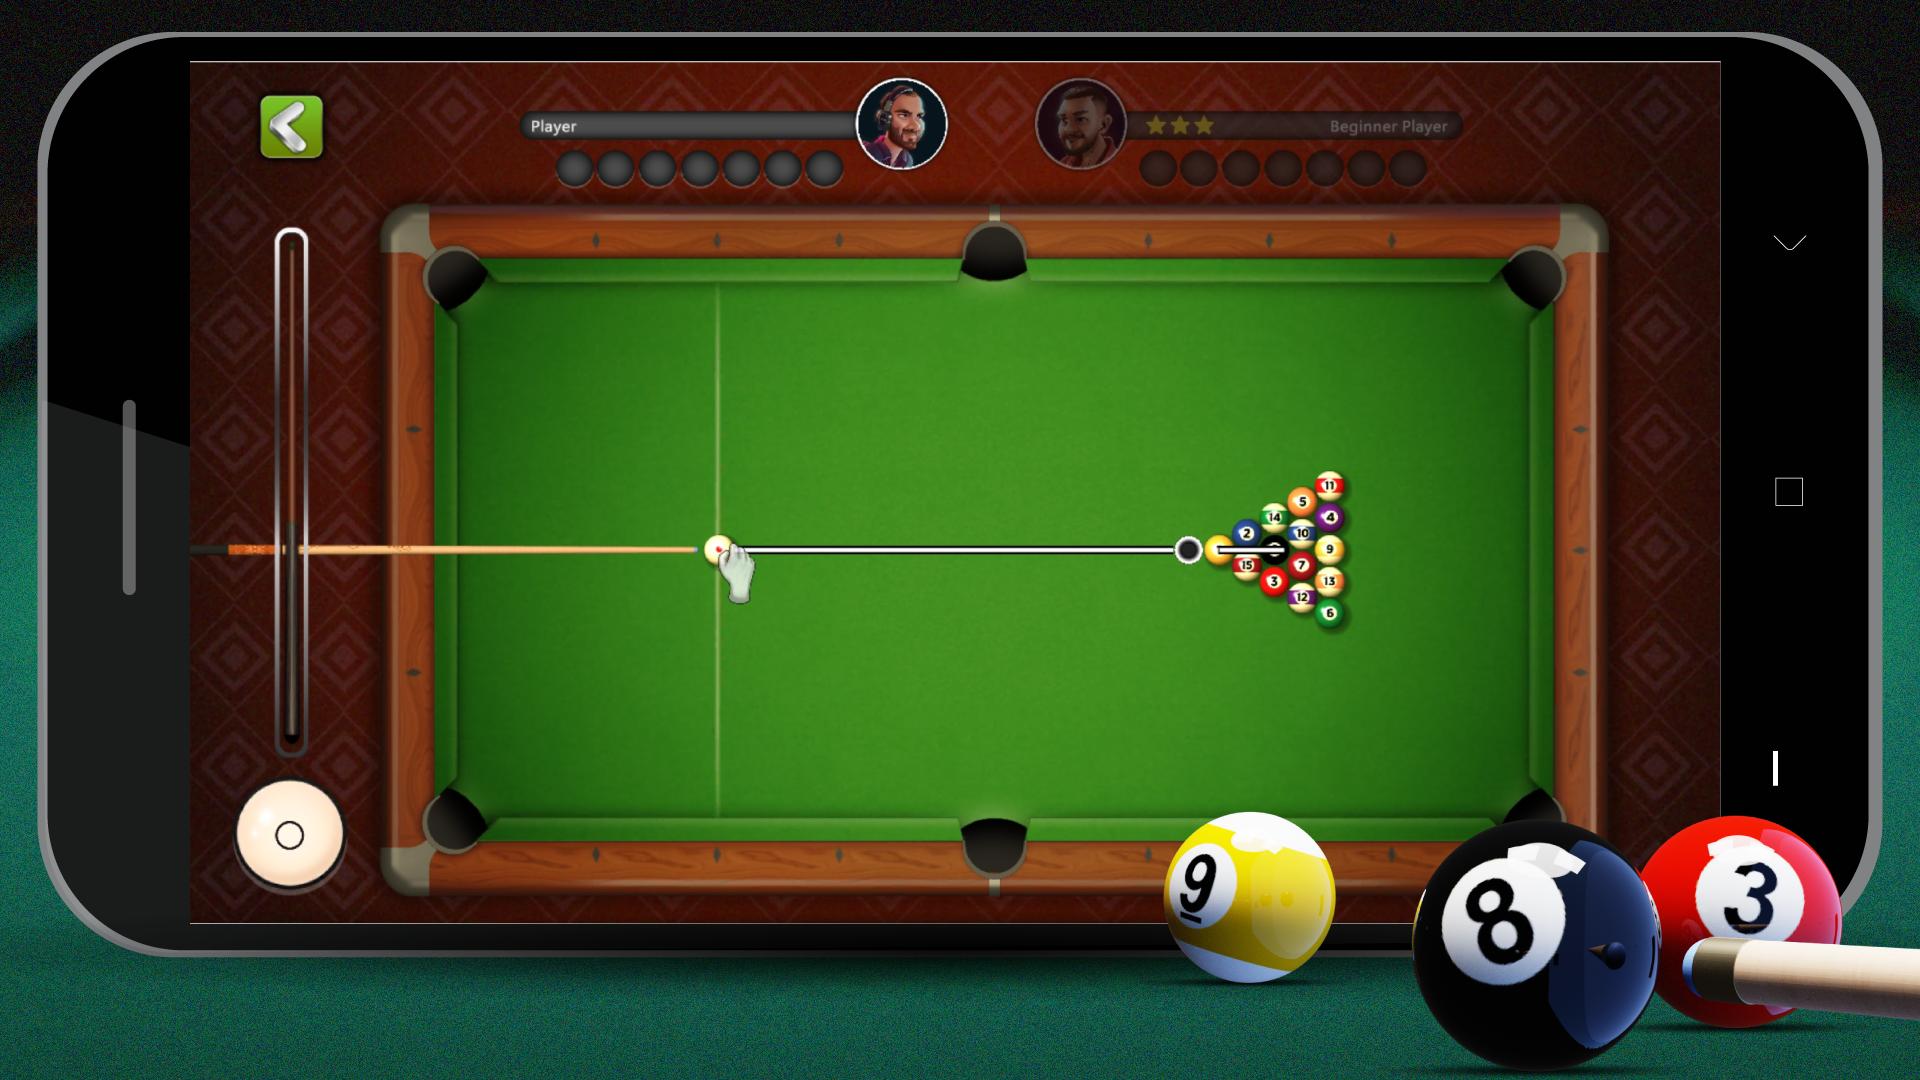 8 Ball Billiards- Offline Free Pool Game 1.51 Screenshot 20